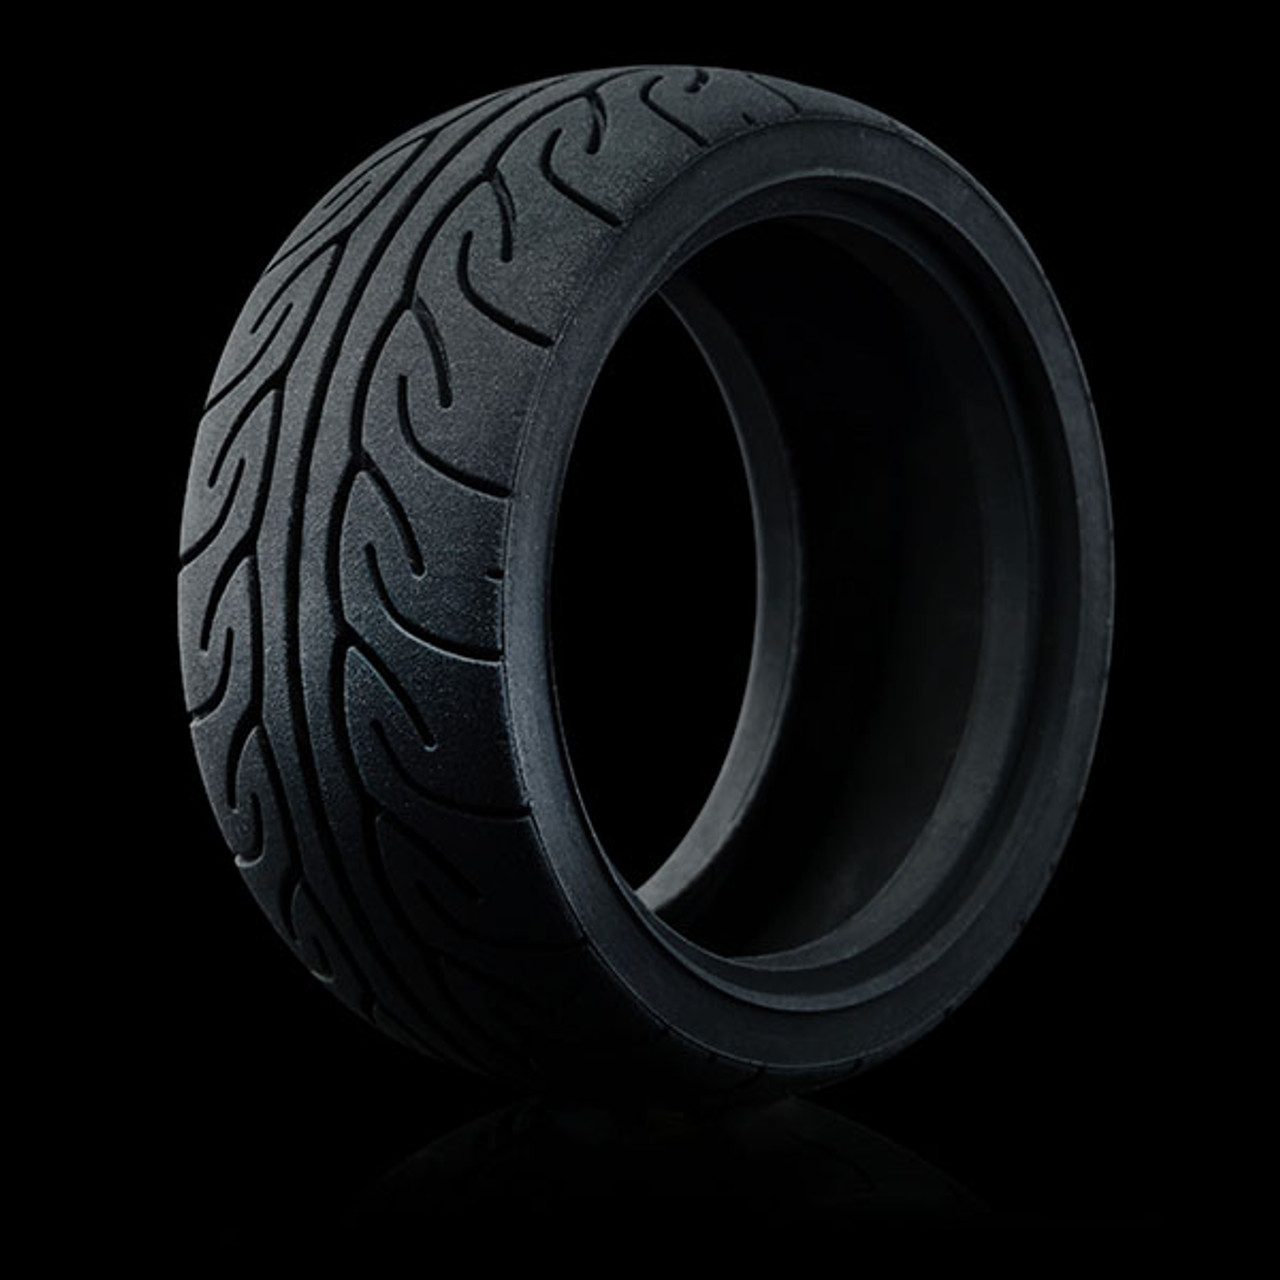 MST M AD8 Realistic tire 50° (4)